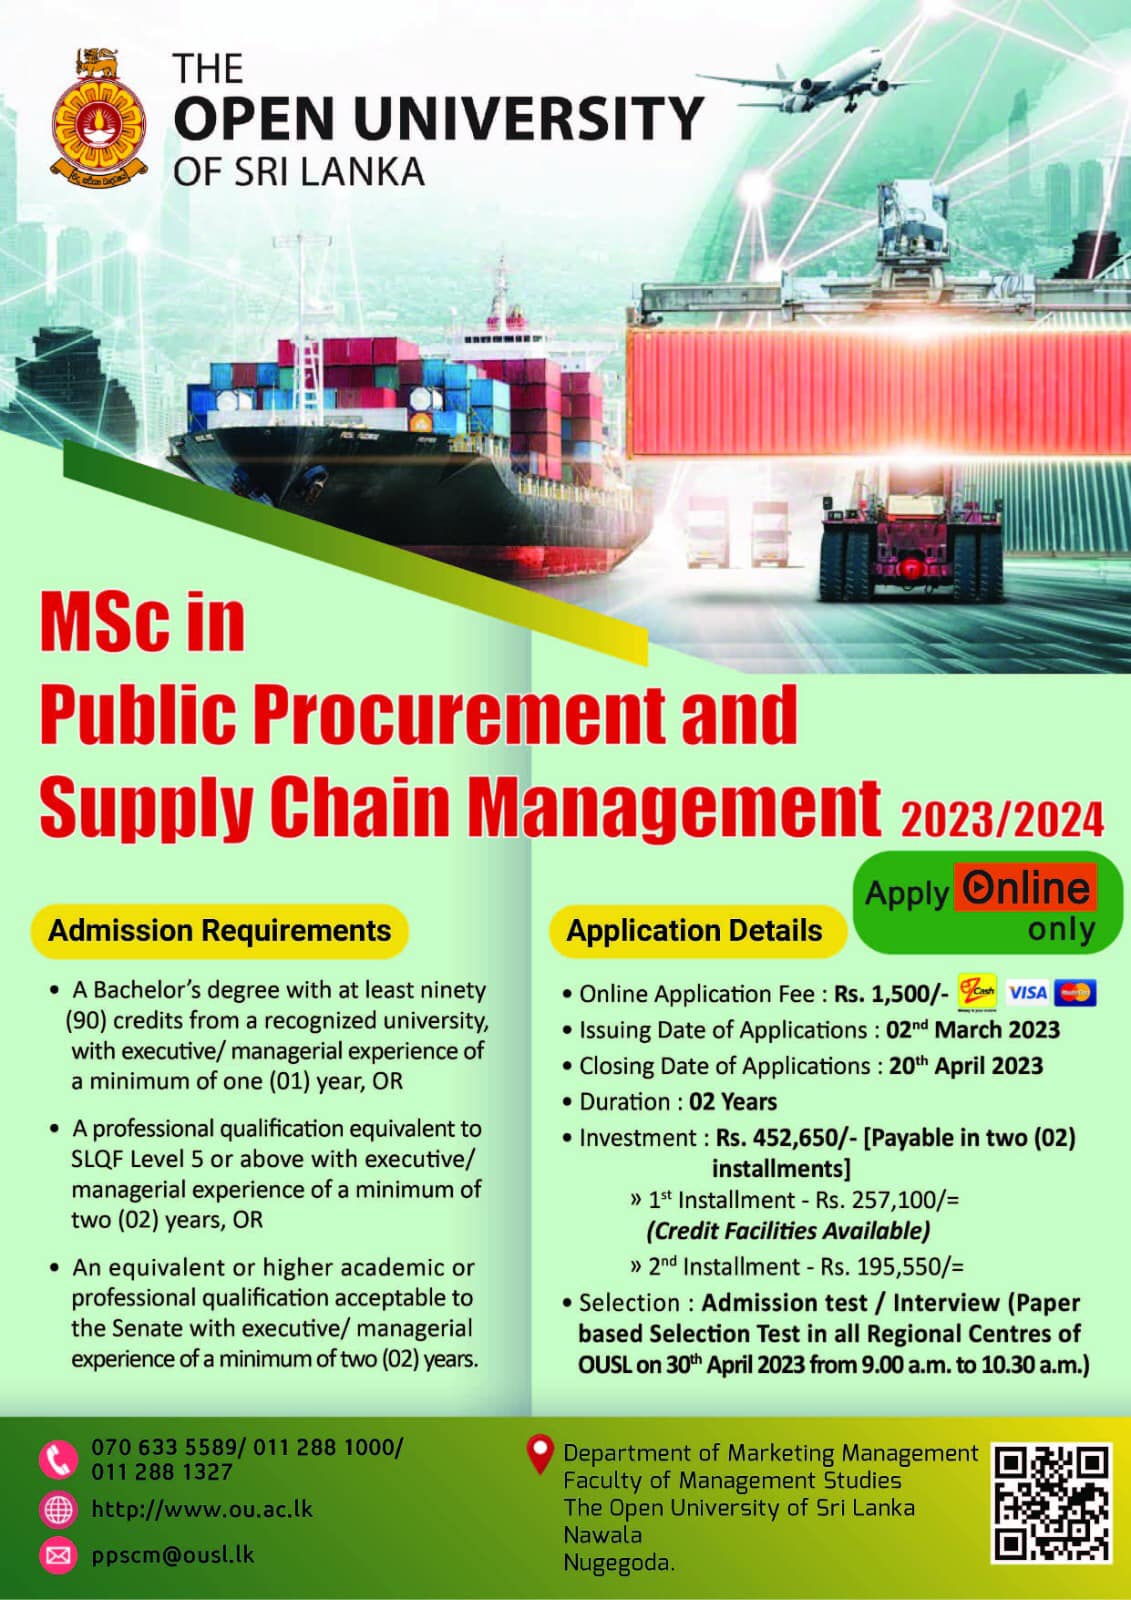 MSc in Public Procurement and Supply Chain Management 2023 - Open University of Sri Lanka